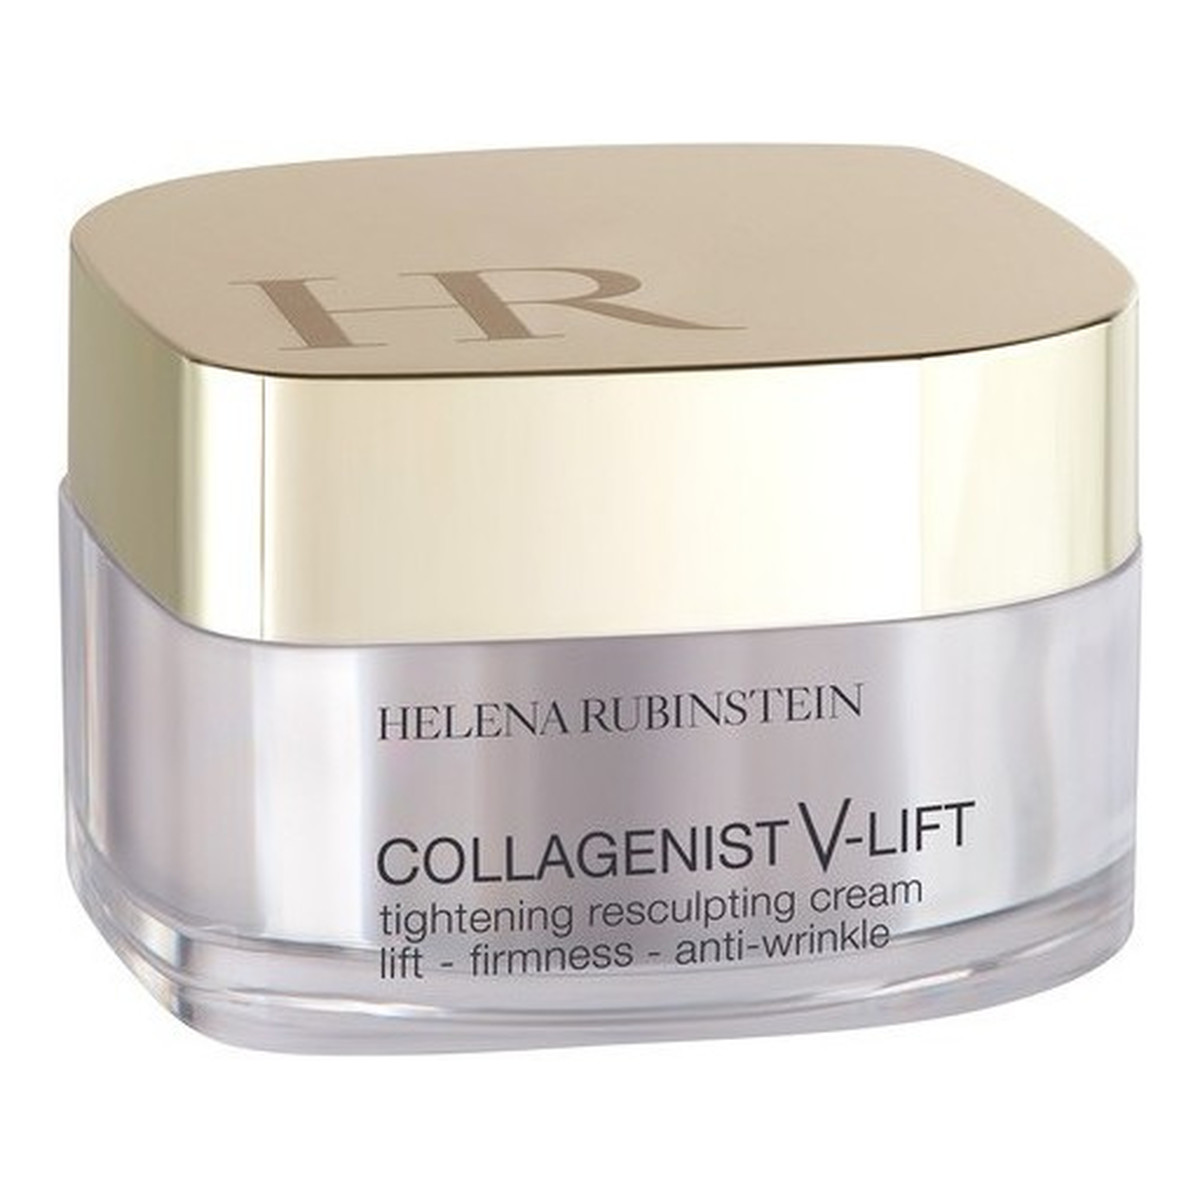 Helena Rubinstein Collagenist V-Lift Tightening Resculpting Cream Liftingujący krem na dzień cera normalna 50ml